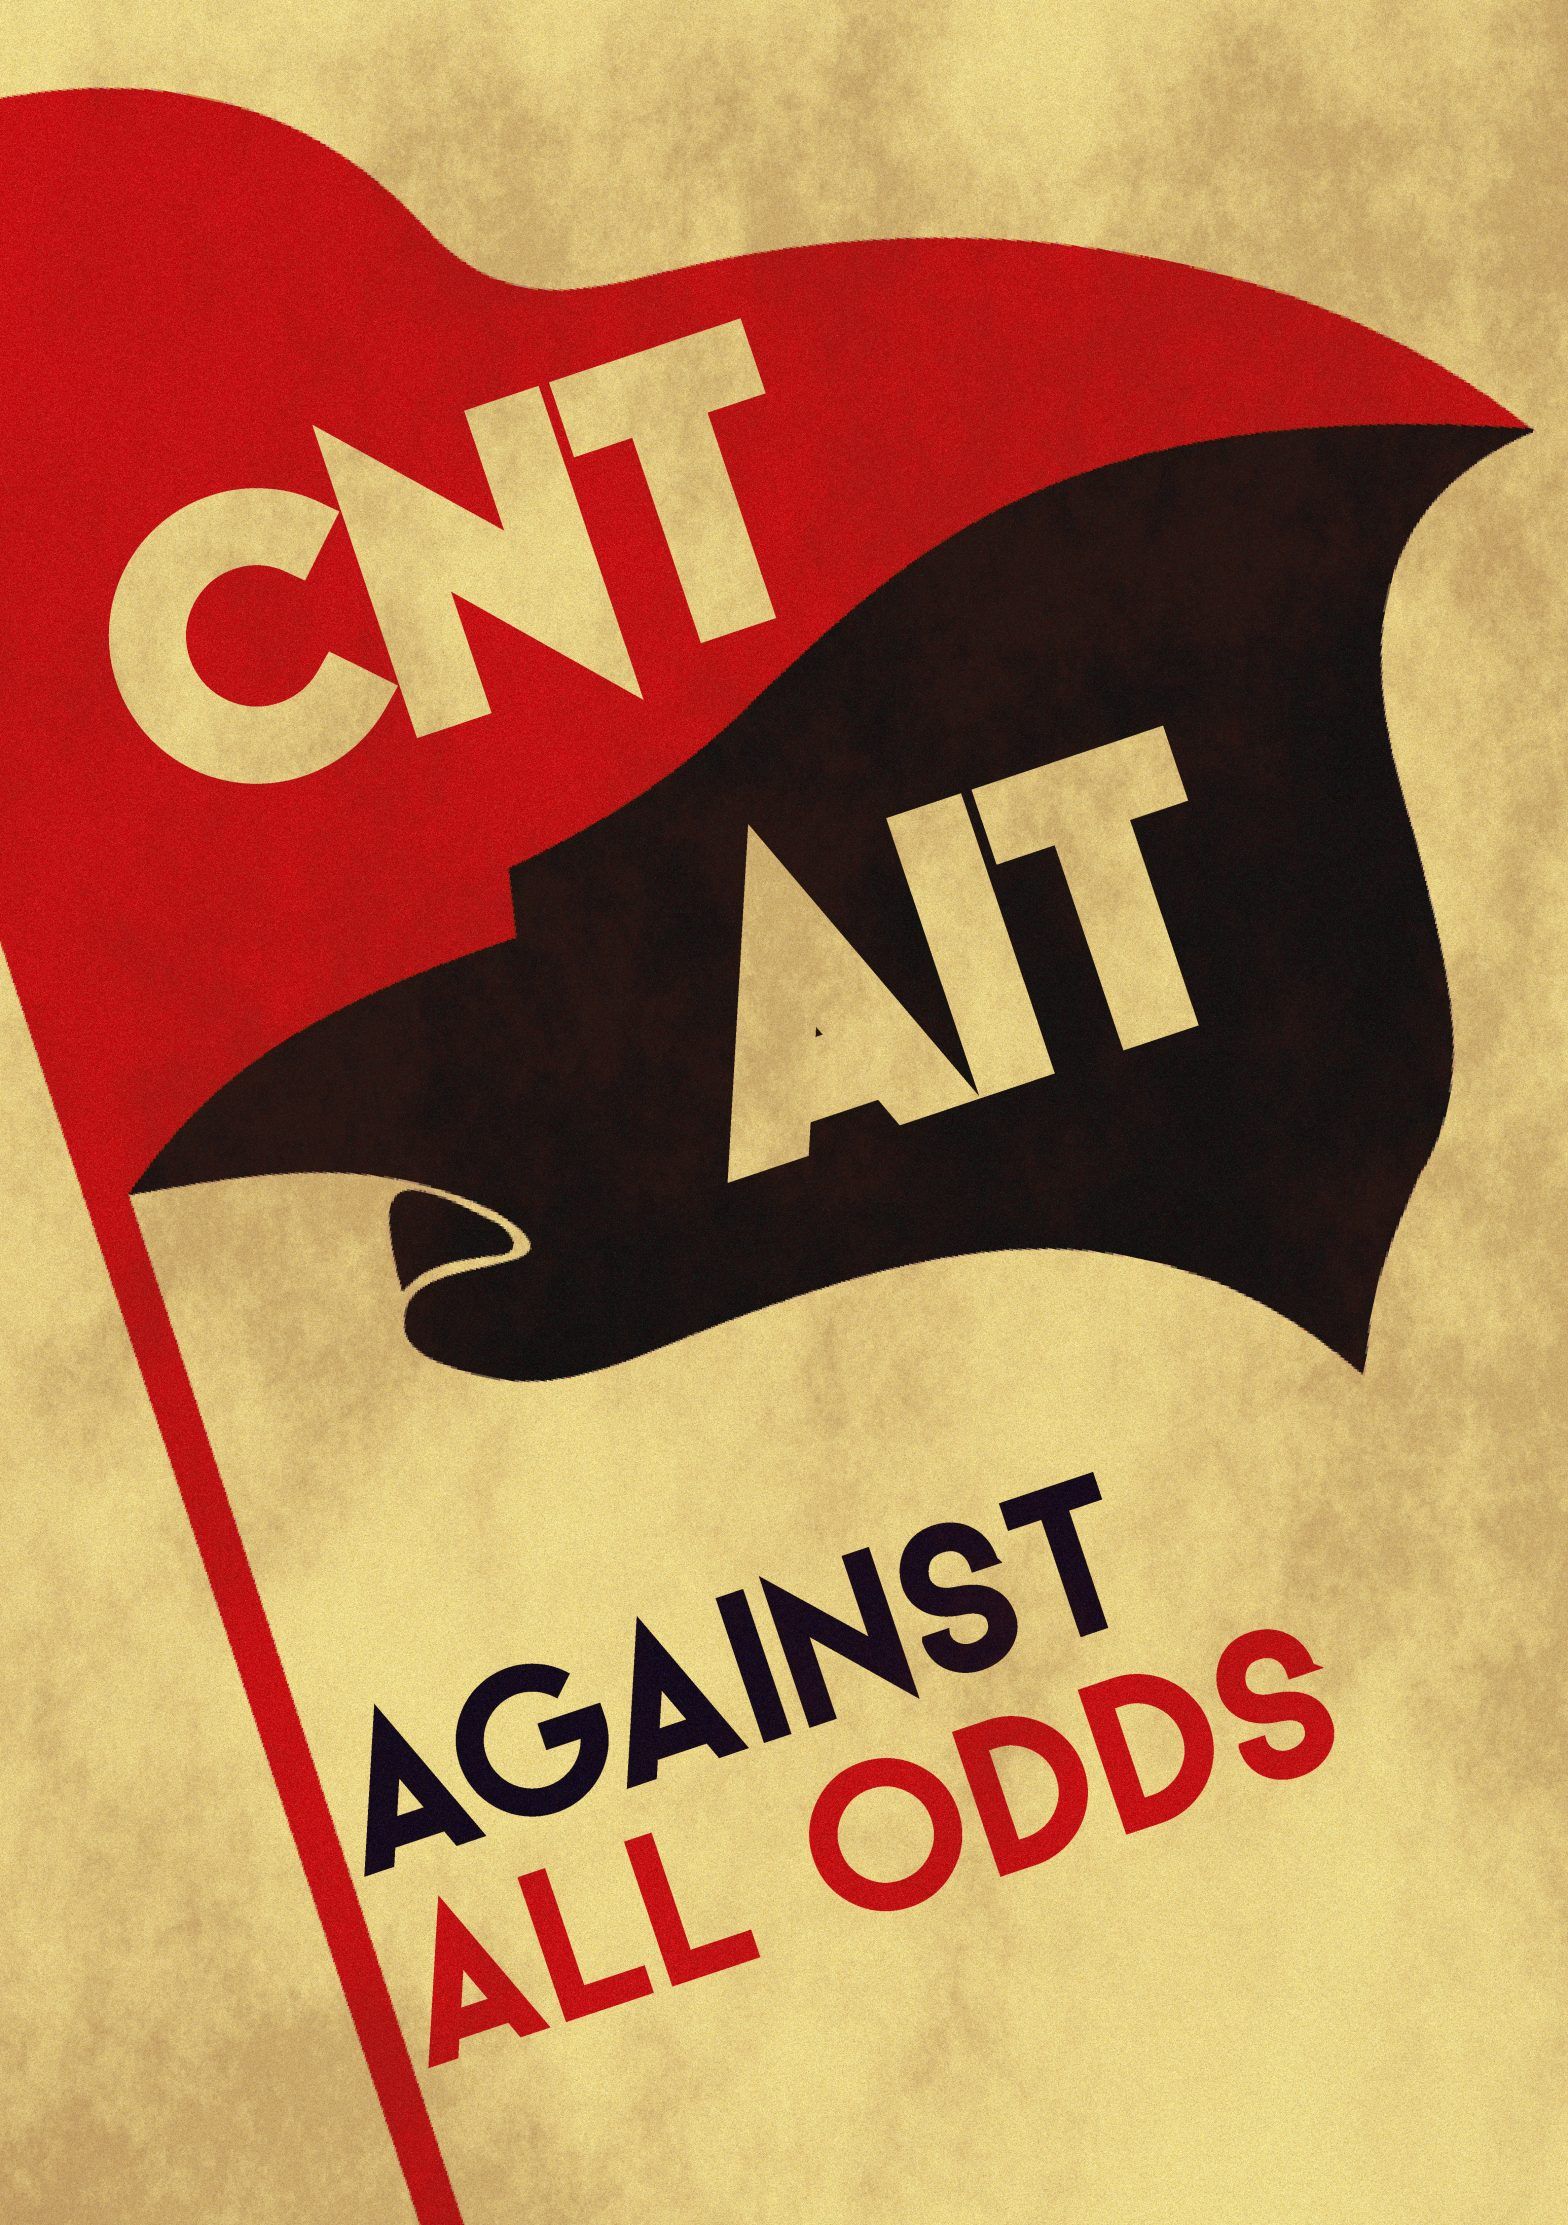 Statement about the legal actions against CNT-AIT